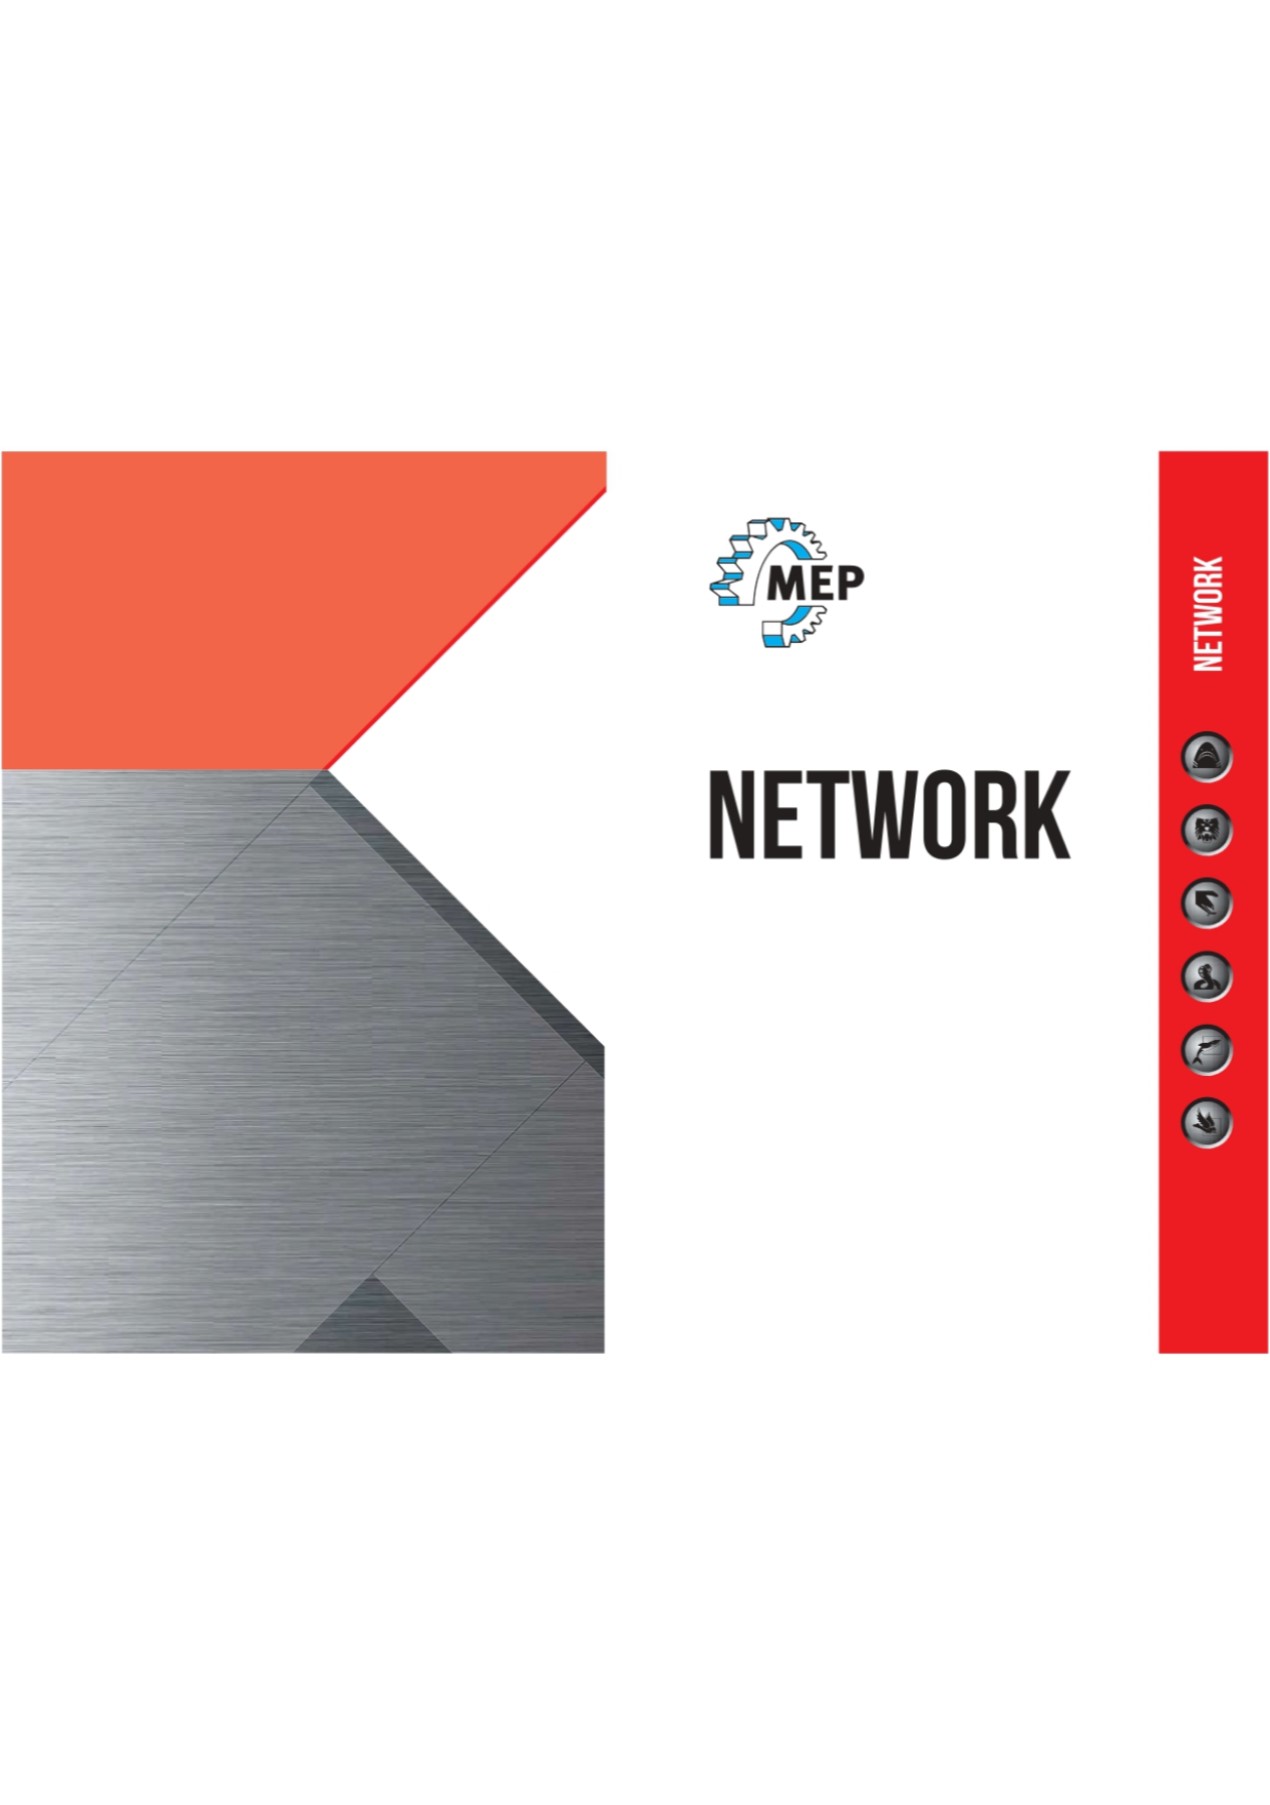 Copertina_catalogo_MEP_Catalogo network_2020_Arroweld Italia Spa